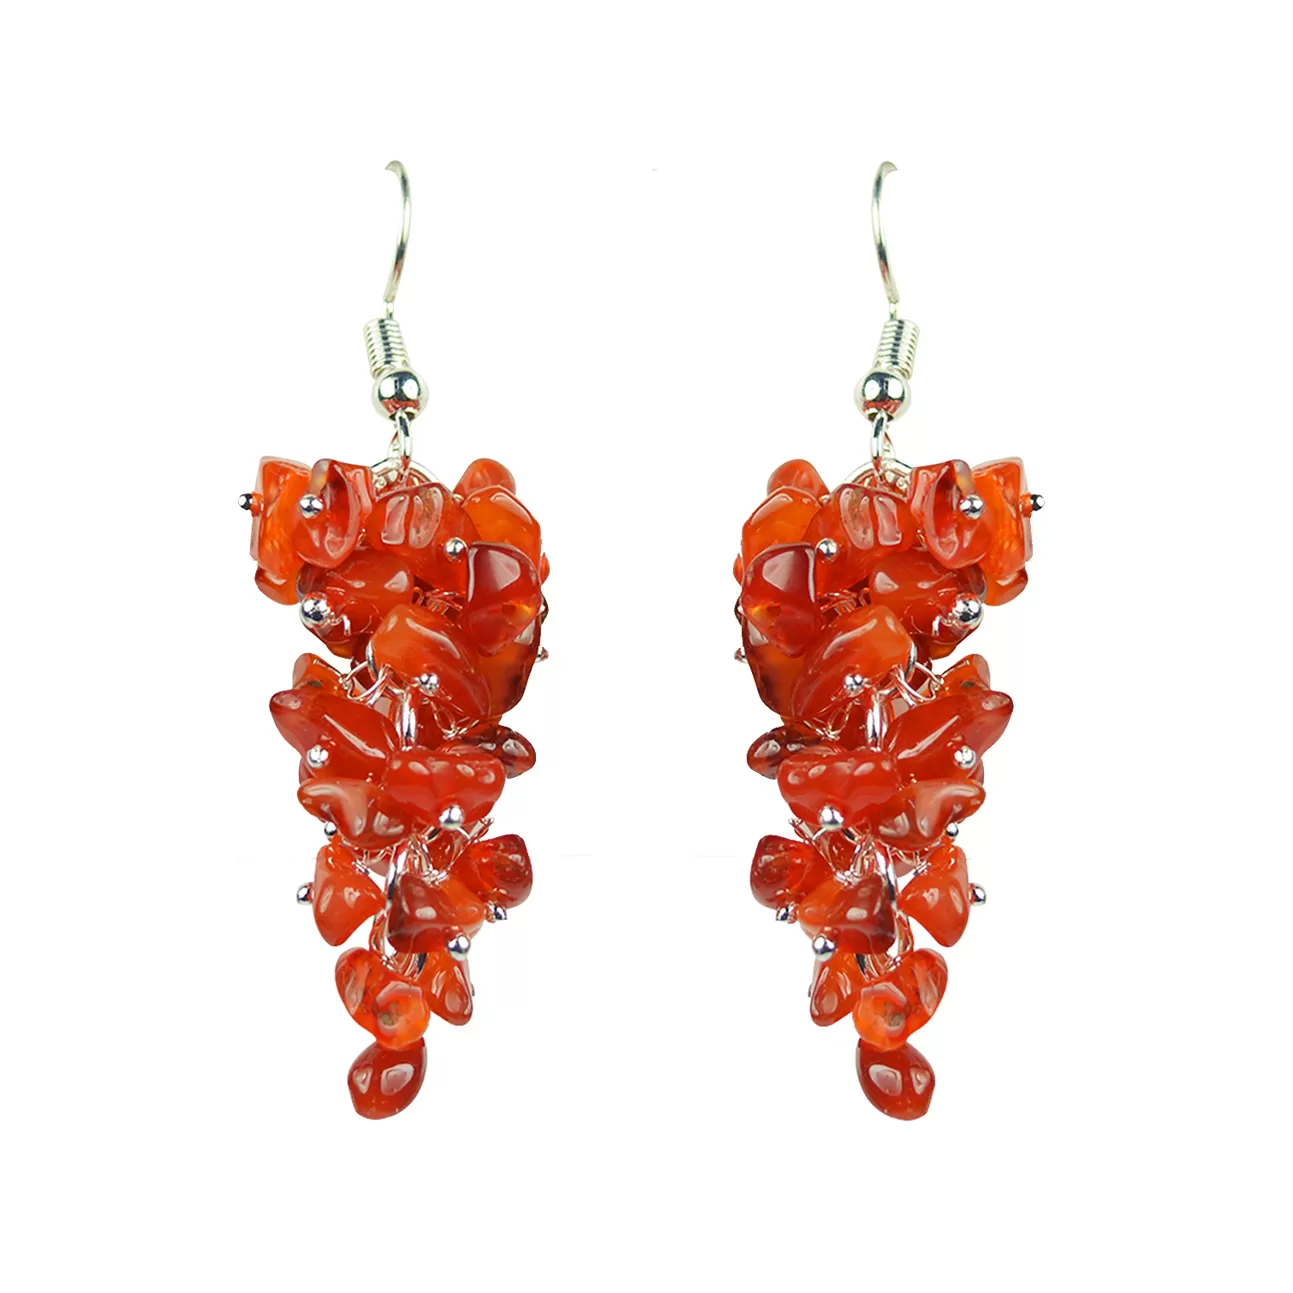 Carnelian Earrings Natural Chip Beads Earrings for Women, Girls (Orange)